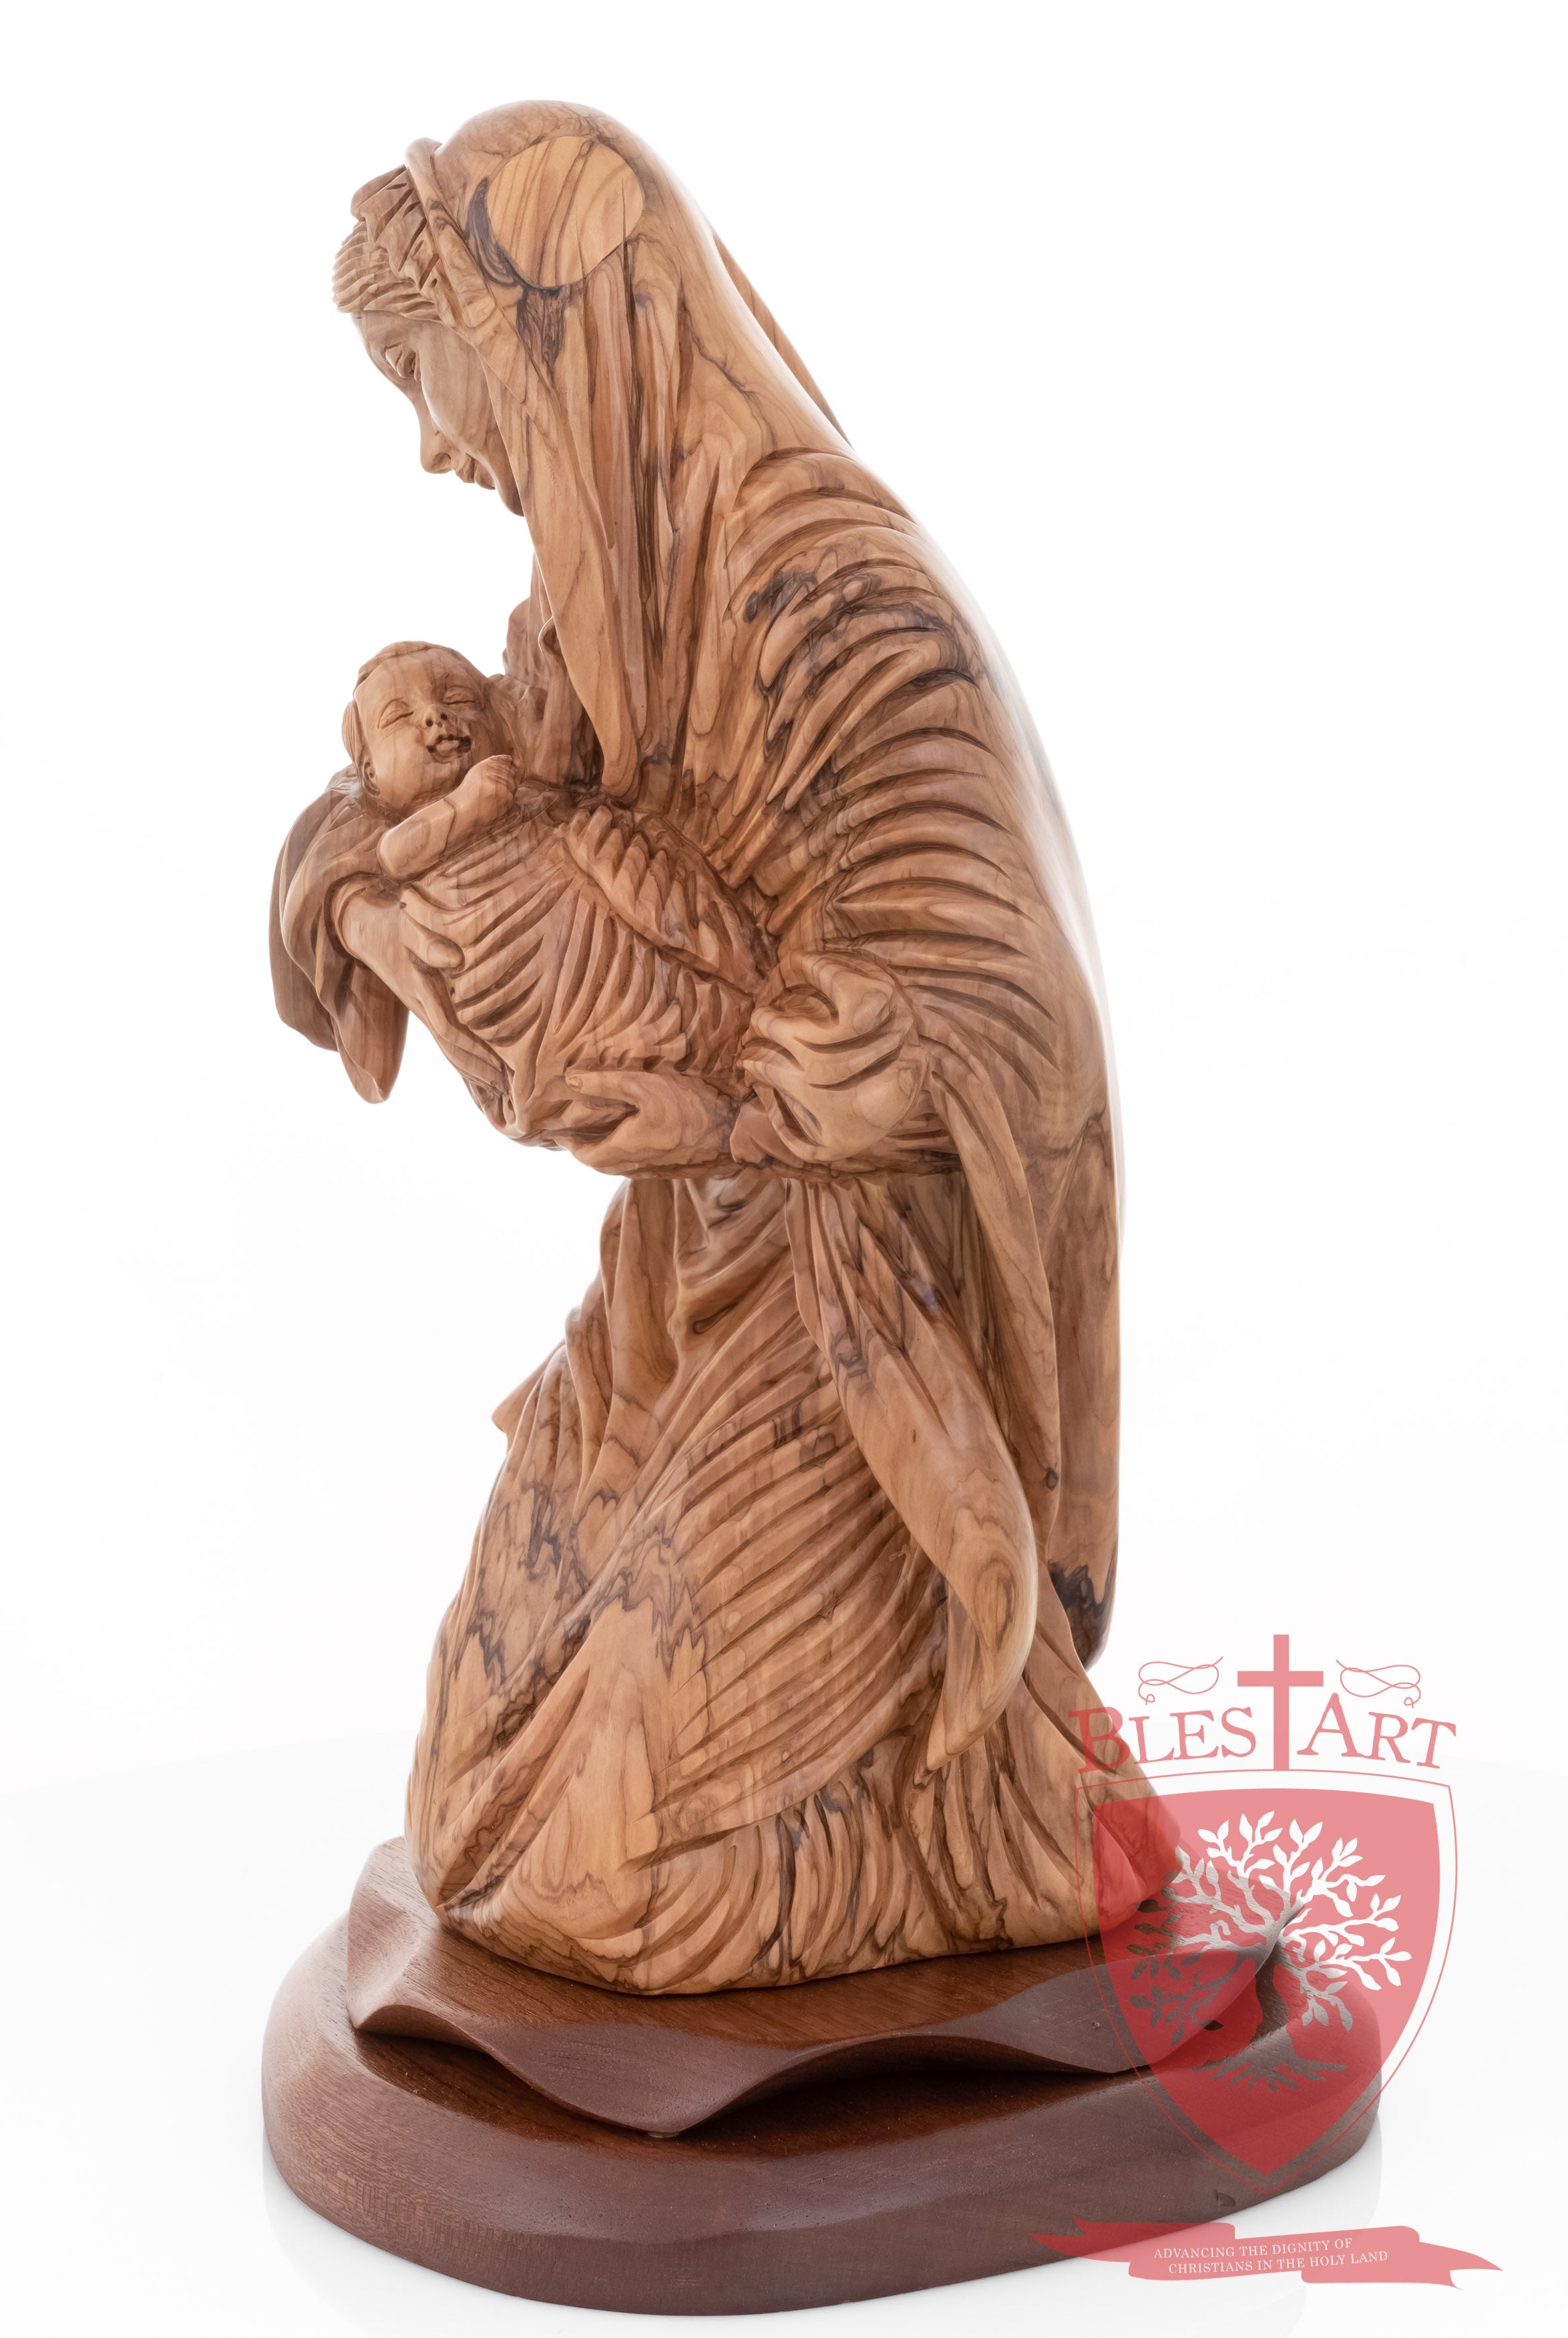 Mary holding Jesus Child